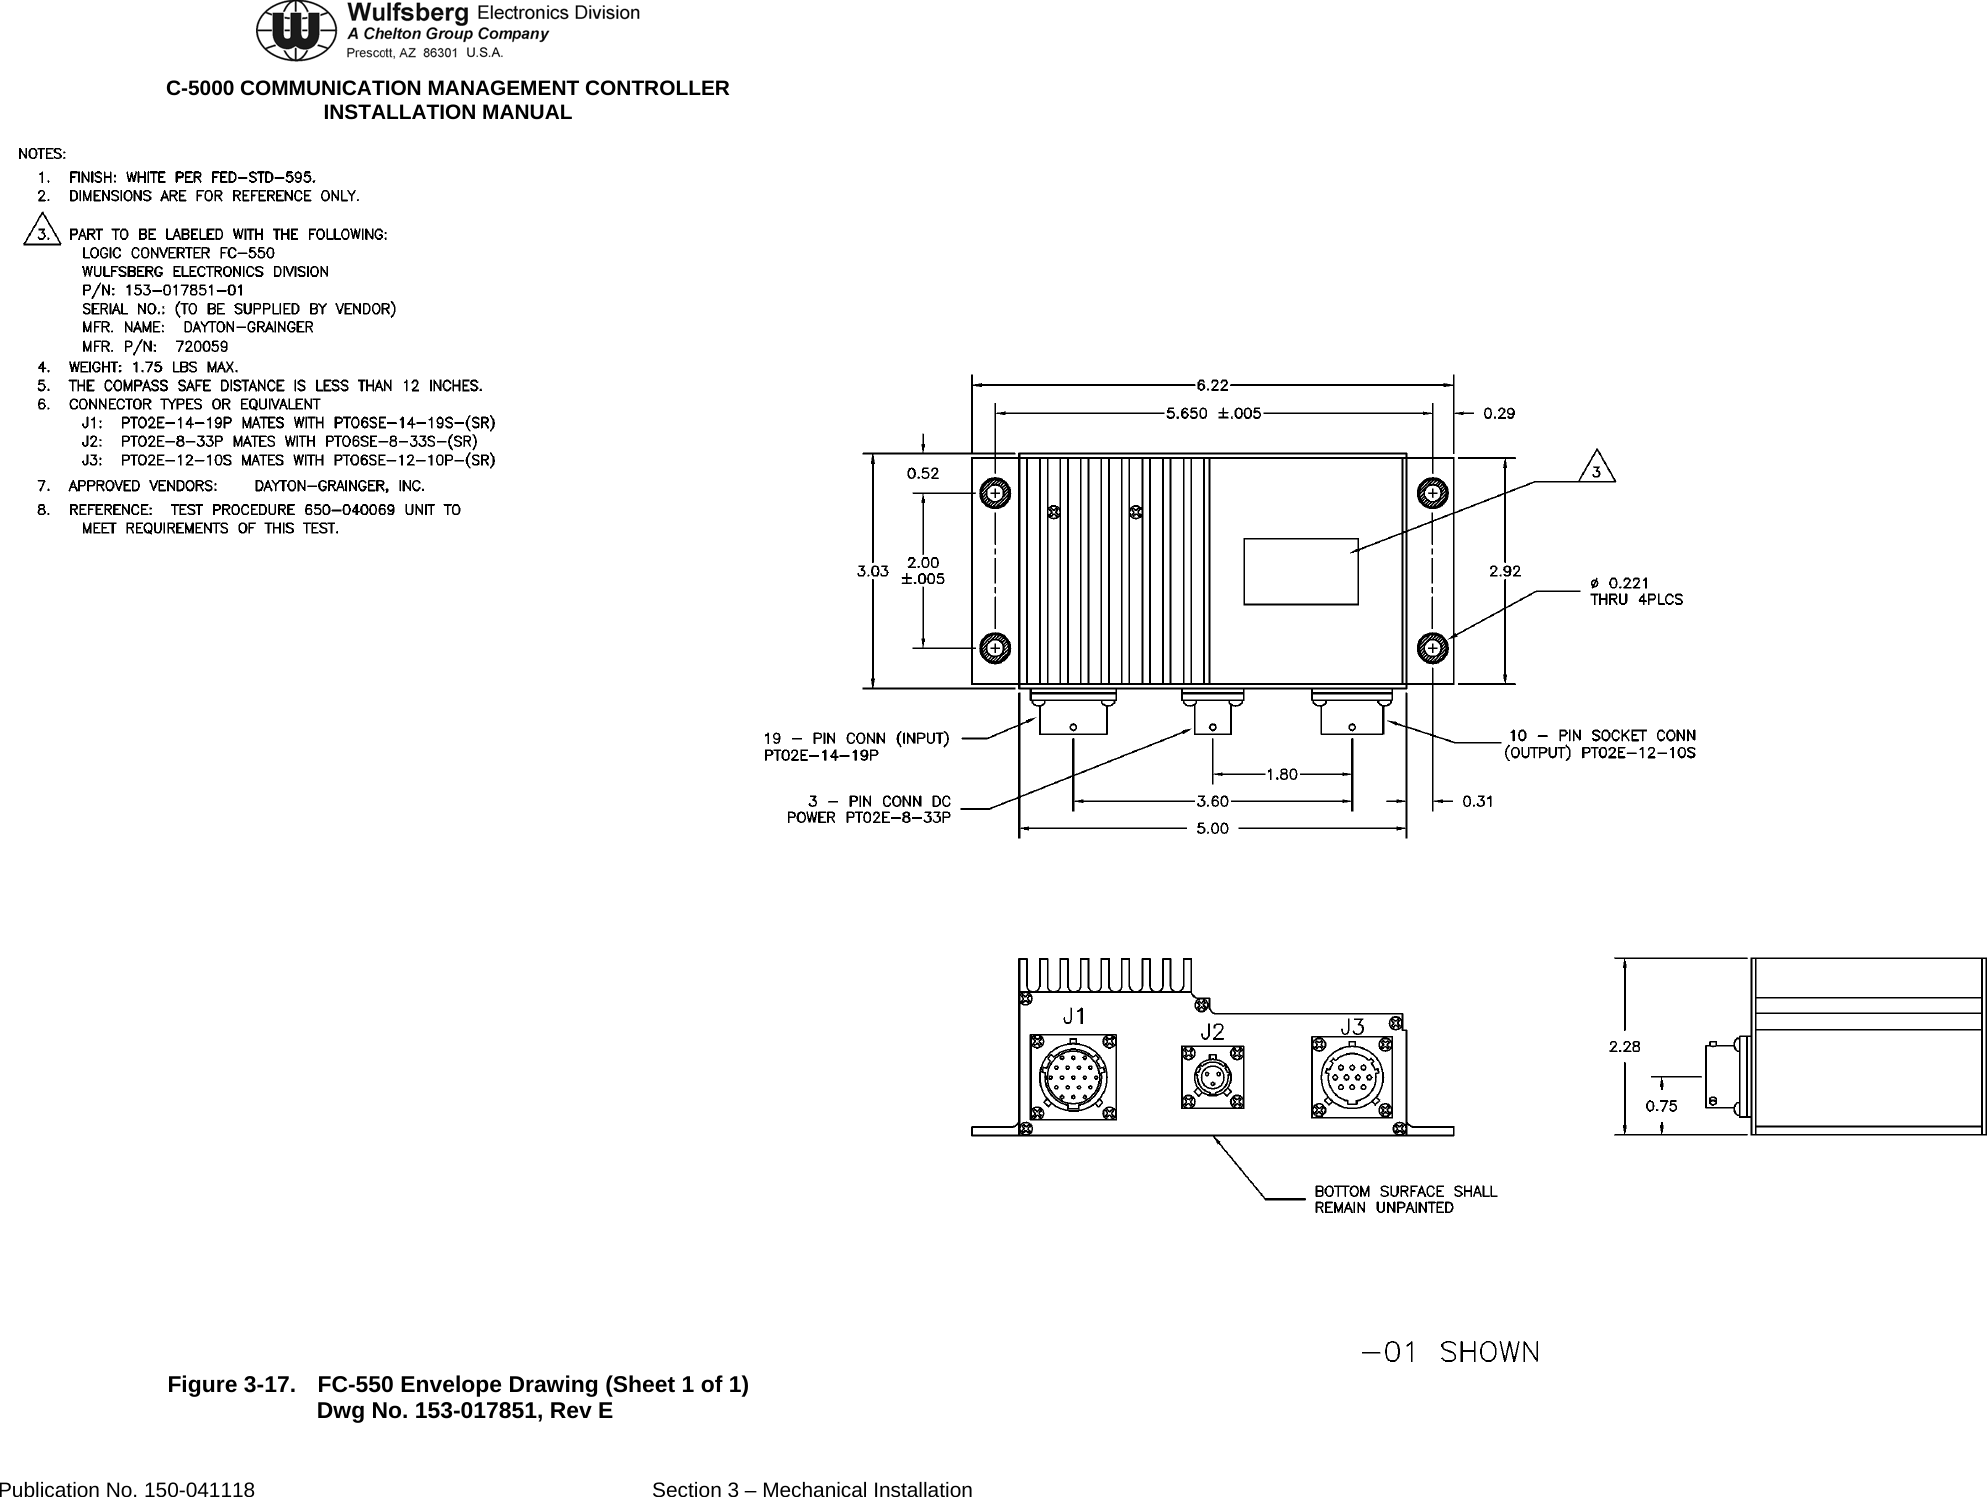  C-5000 COMMUNICATION MANAGEMENT CONTROLLER INSTALLATION MANUAL  Figure 3-17.  FC-550 Envelope Drawing (Sheet 1 of 1) Dwg No. 153-017851, Rev E Publication No. 150-041118  Section 3 – Mechanical Installation 